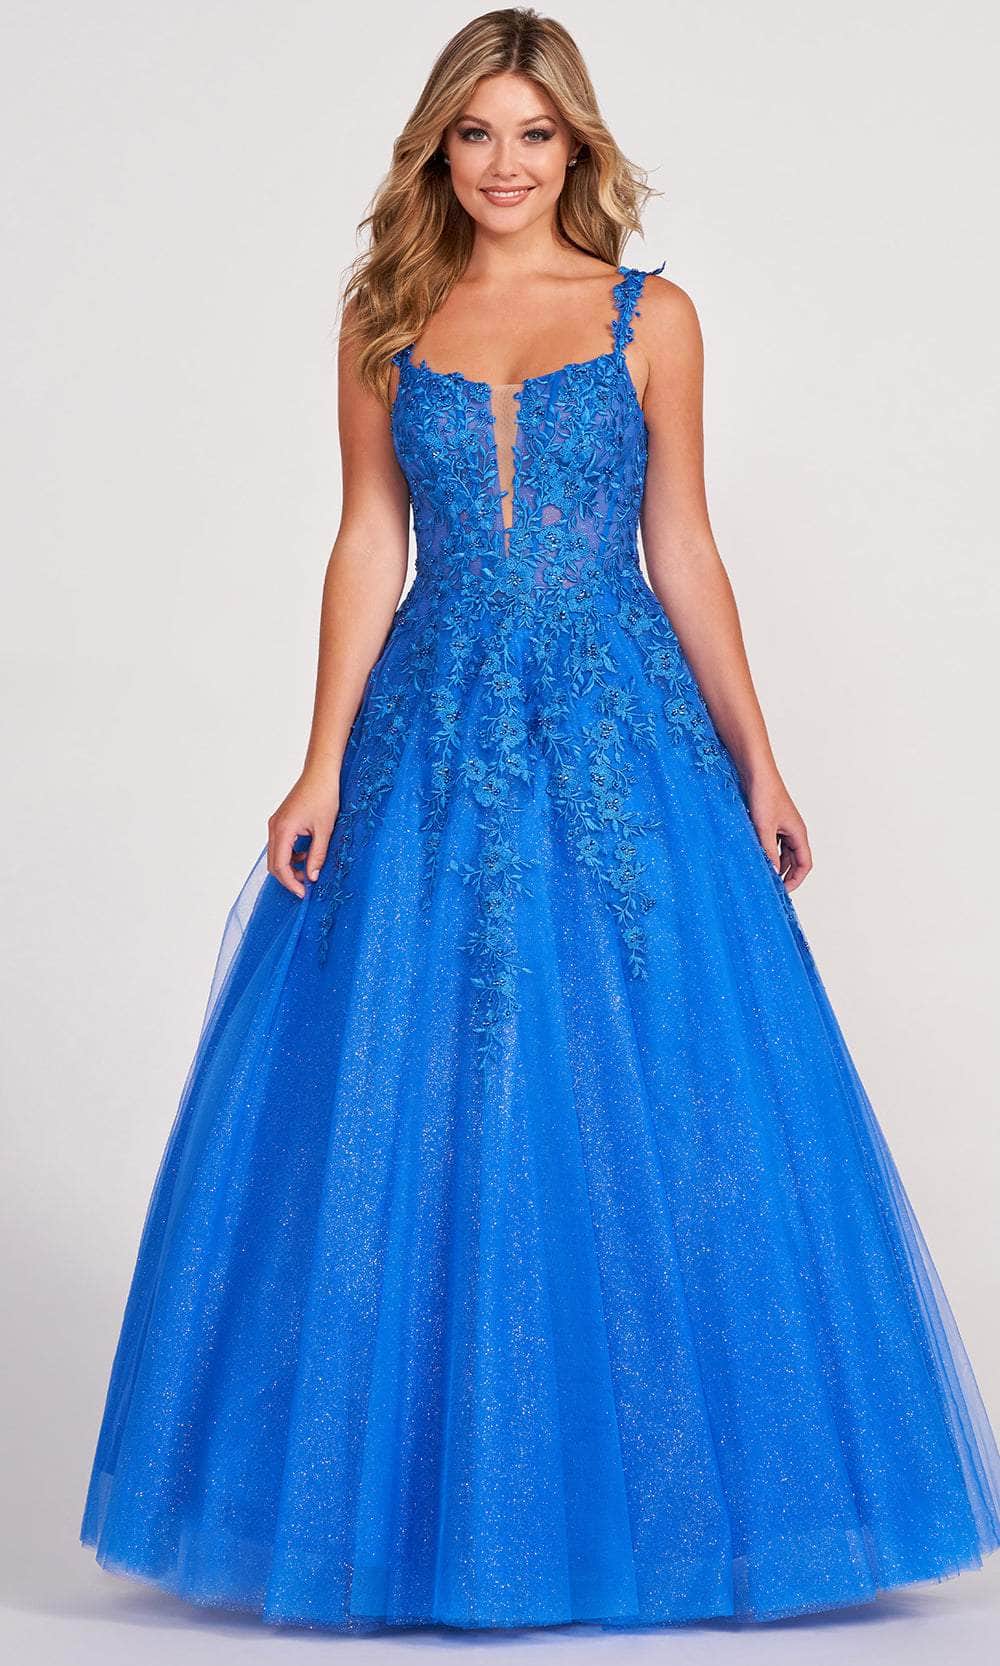 Ellie Wilde EW120014 - Applique Tulle A-Line Prom Dress Prom Dresses 00 / Royal Blue